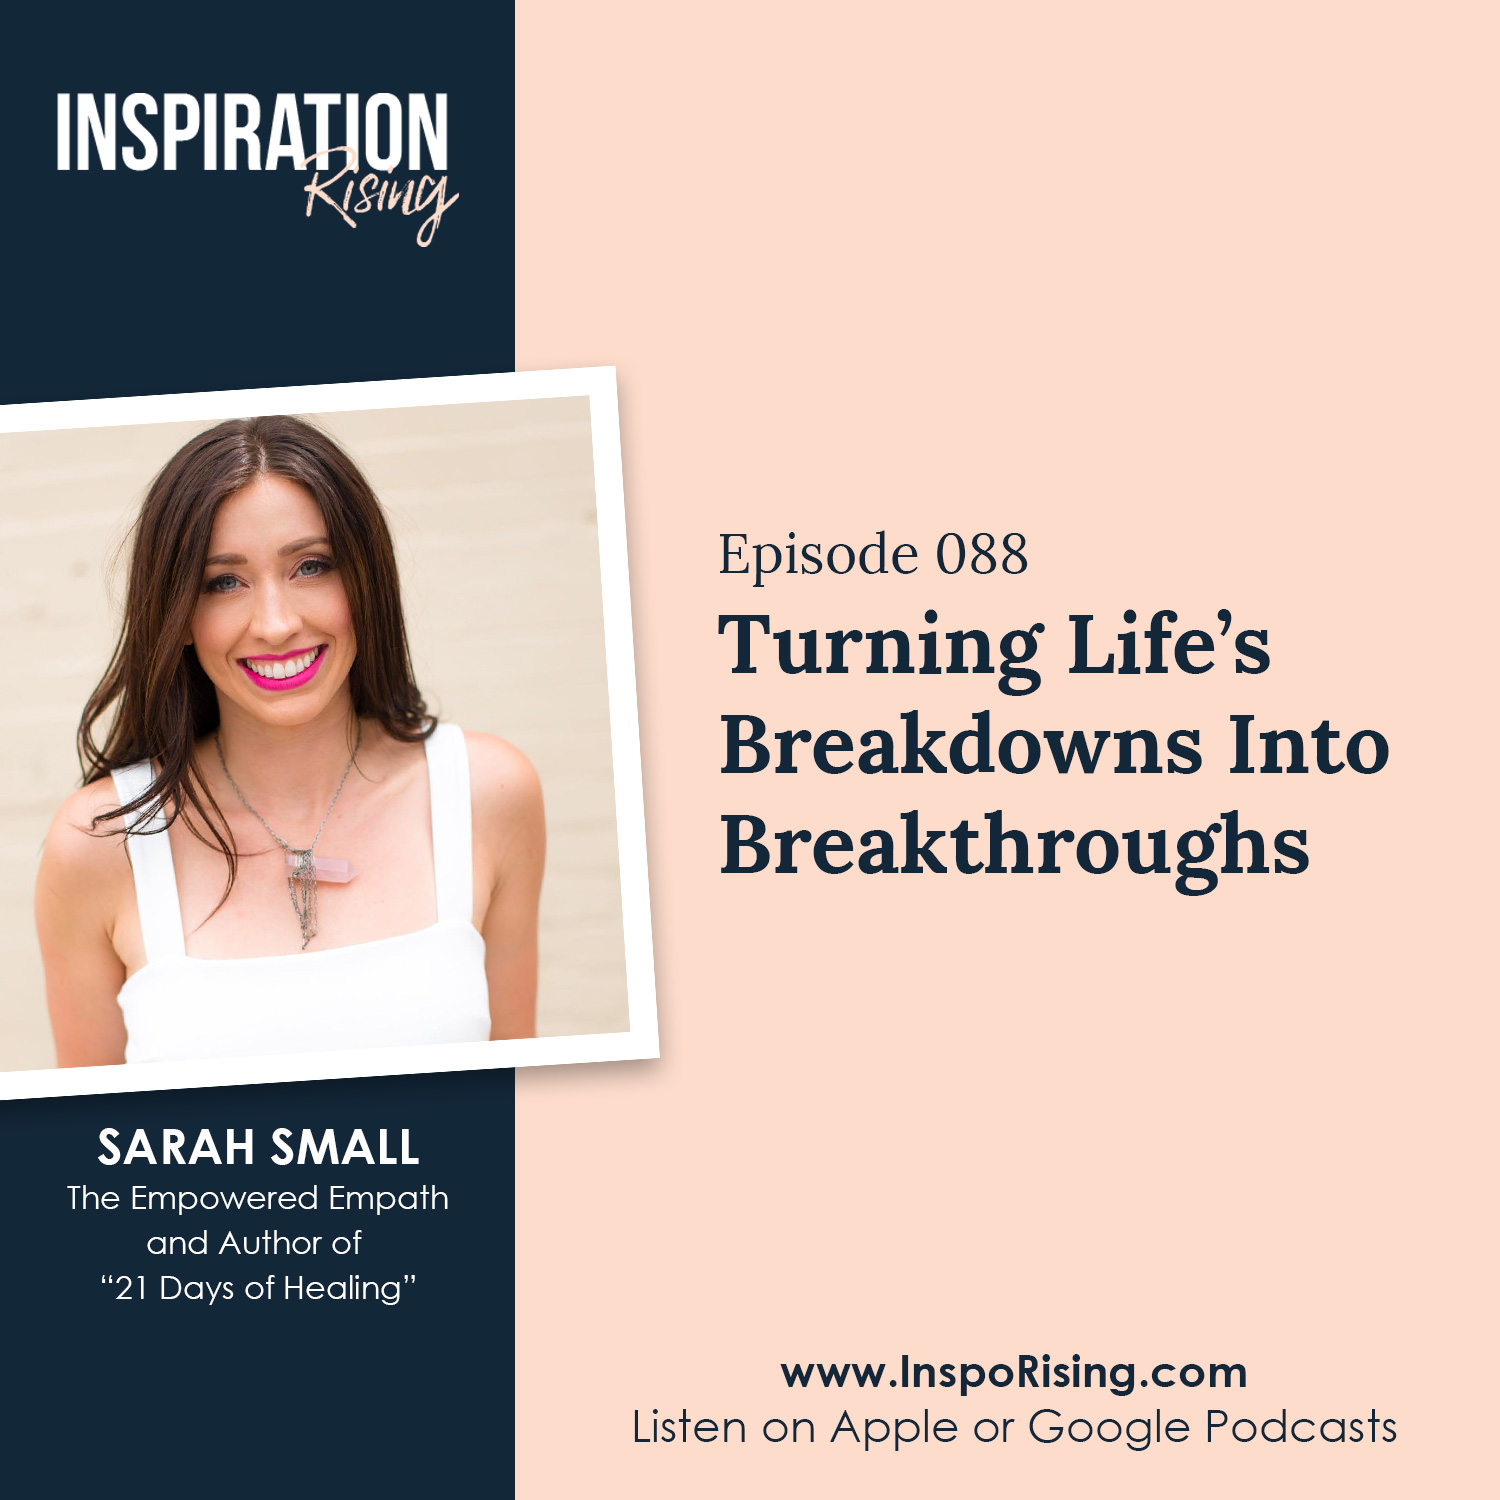 Sarah Small - The Empowered Empath